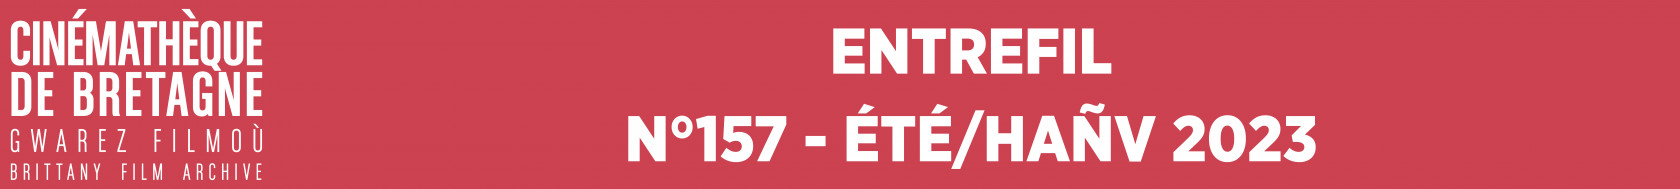 Entrefil n°157 - Été/Hañv 2023